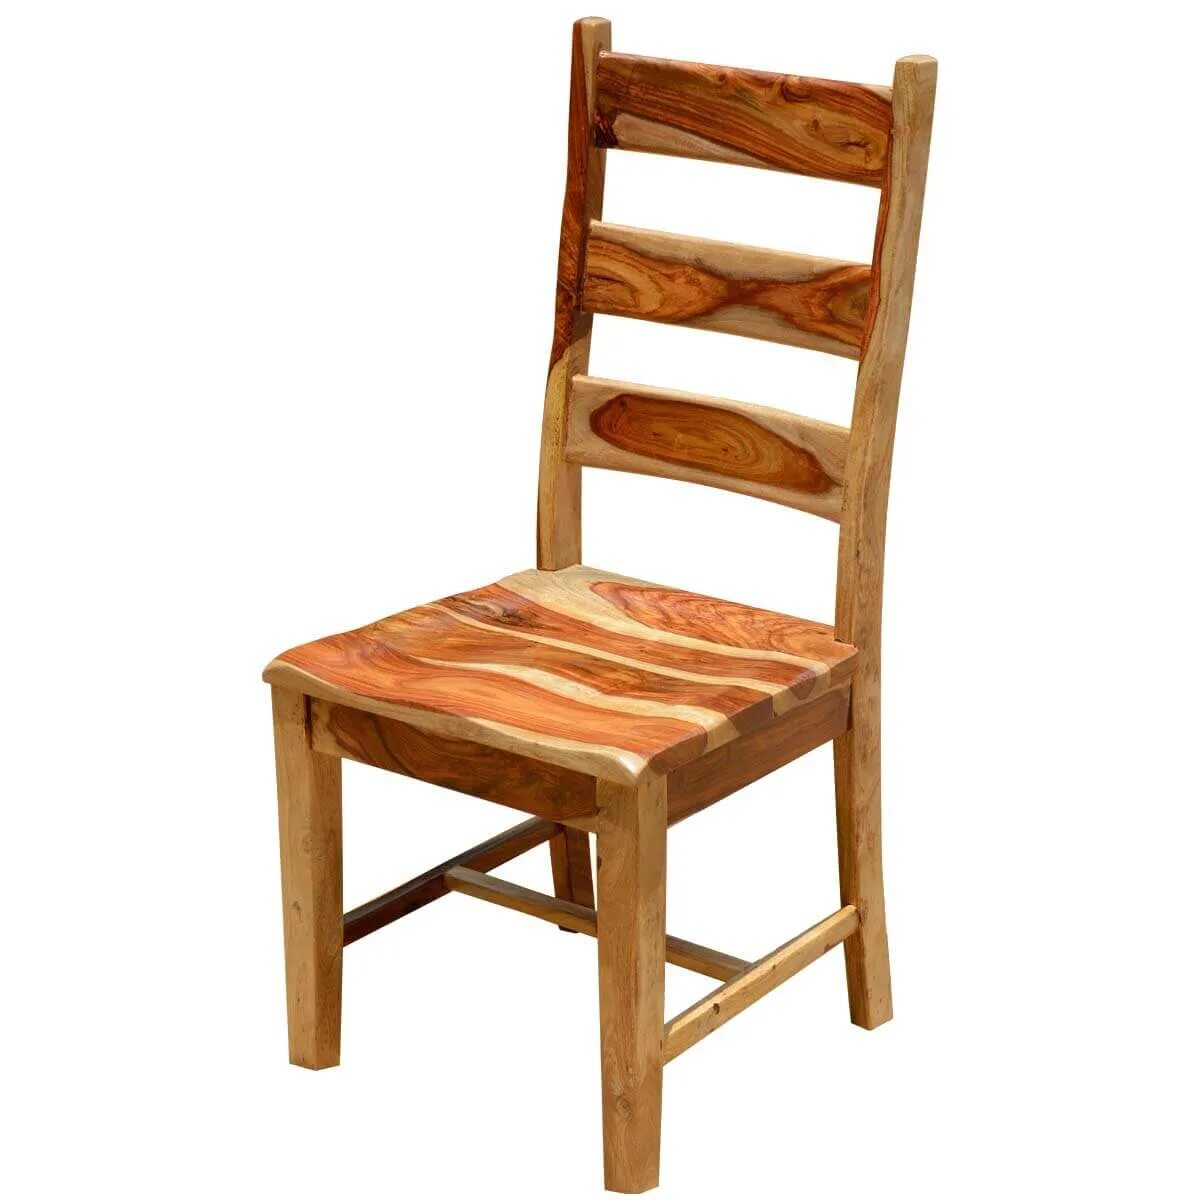 Wooden chair. Стул деревянный. Стул дерево. Фабричные стулья из дерева. Деревянные стулья для дачи.